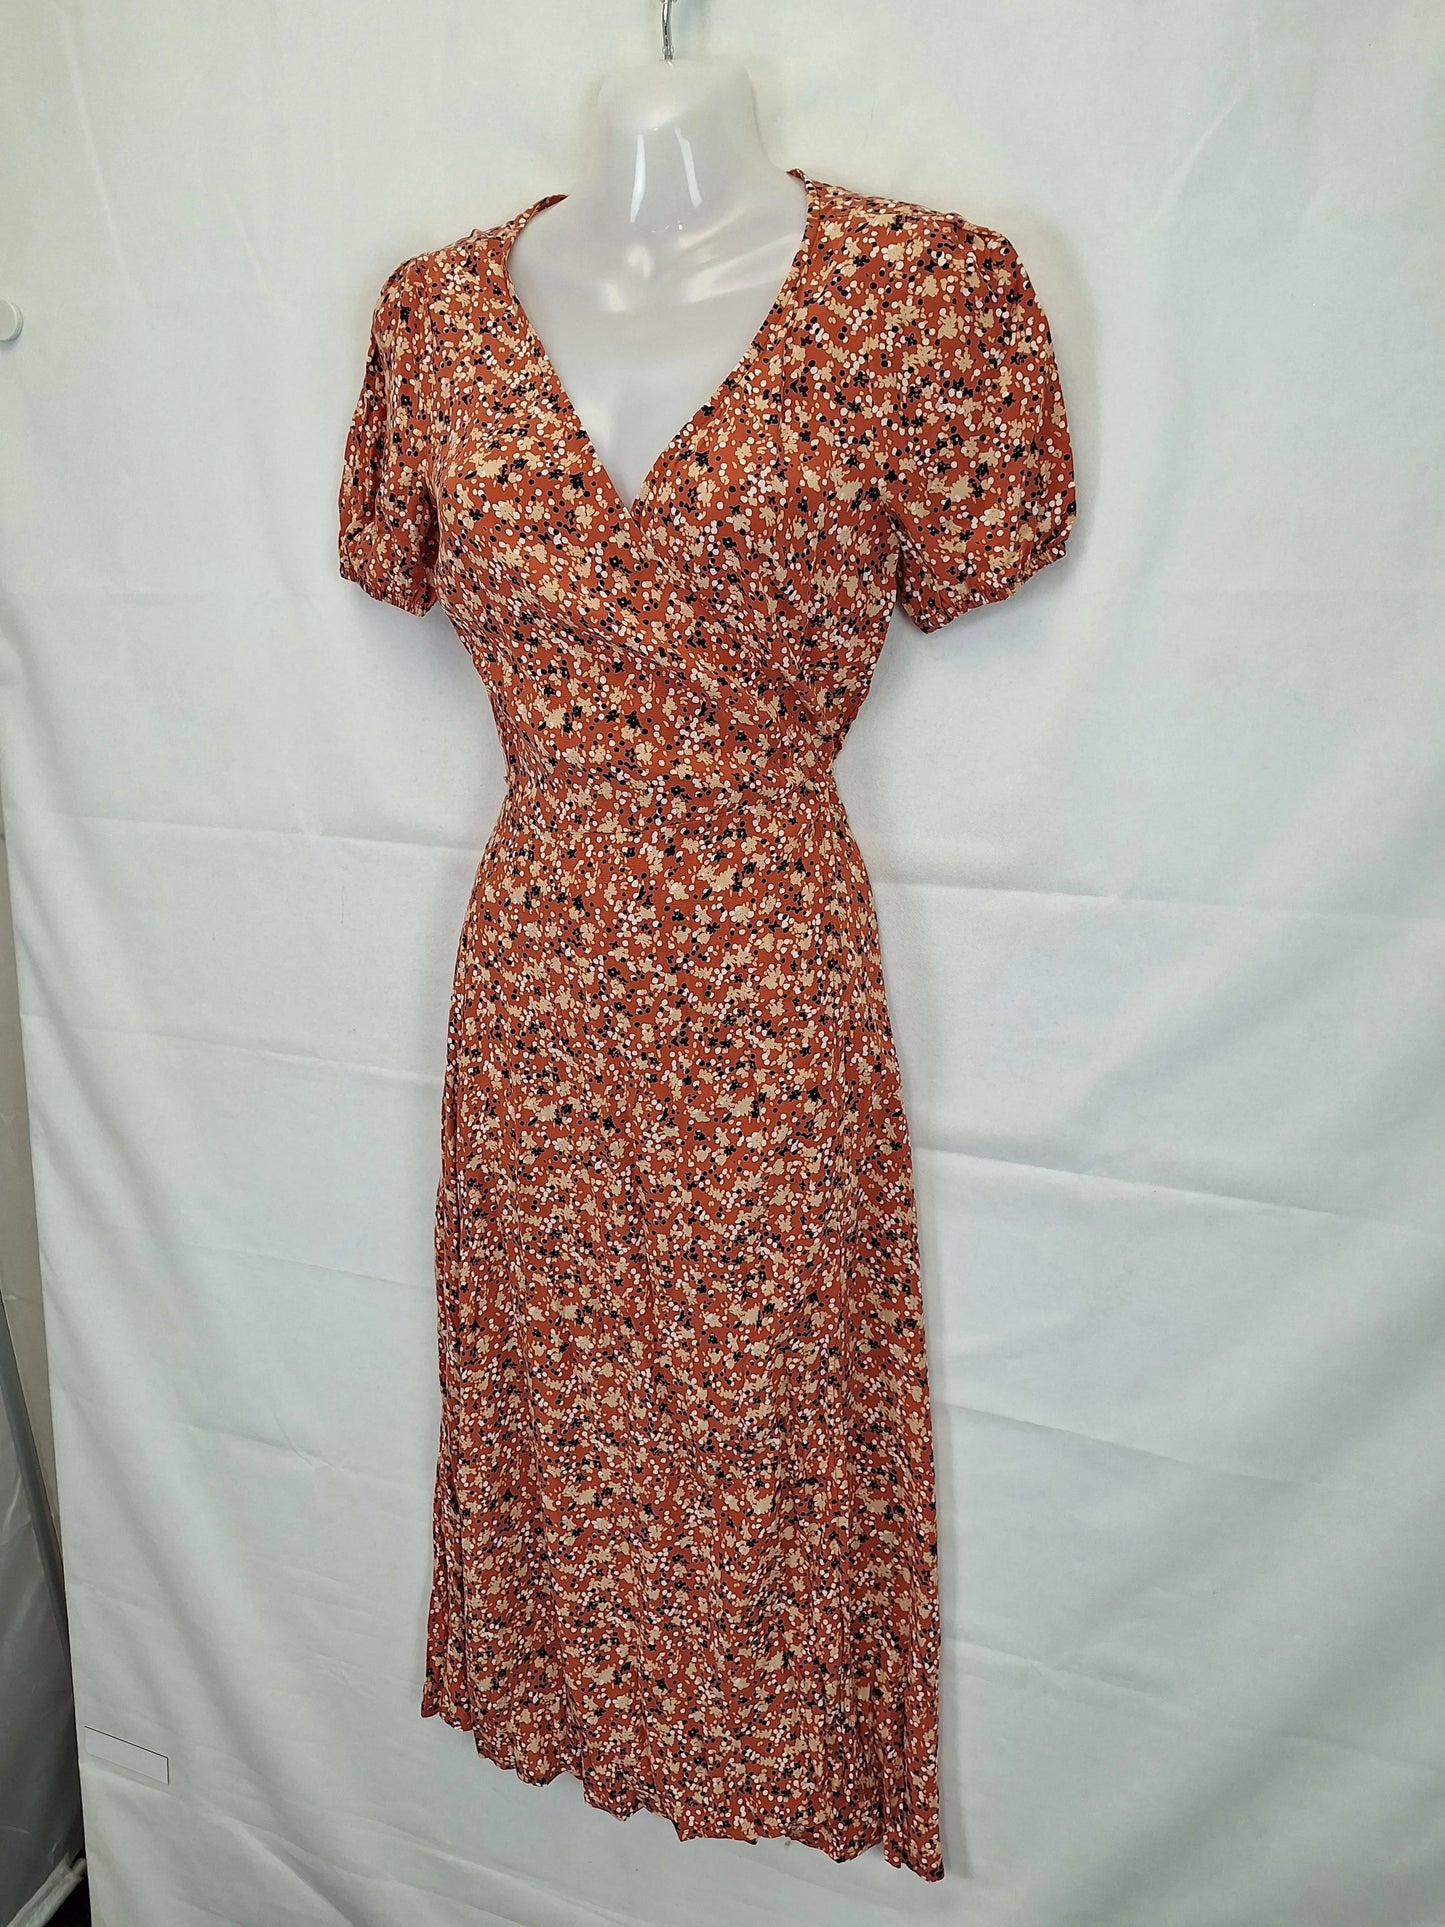 Kookai Tallis Wrap Midi Dress Size 6 by SwapUp-Online Second Hand Store-Online Thrift Store